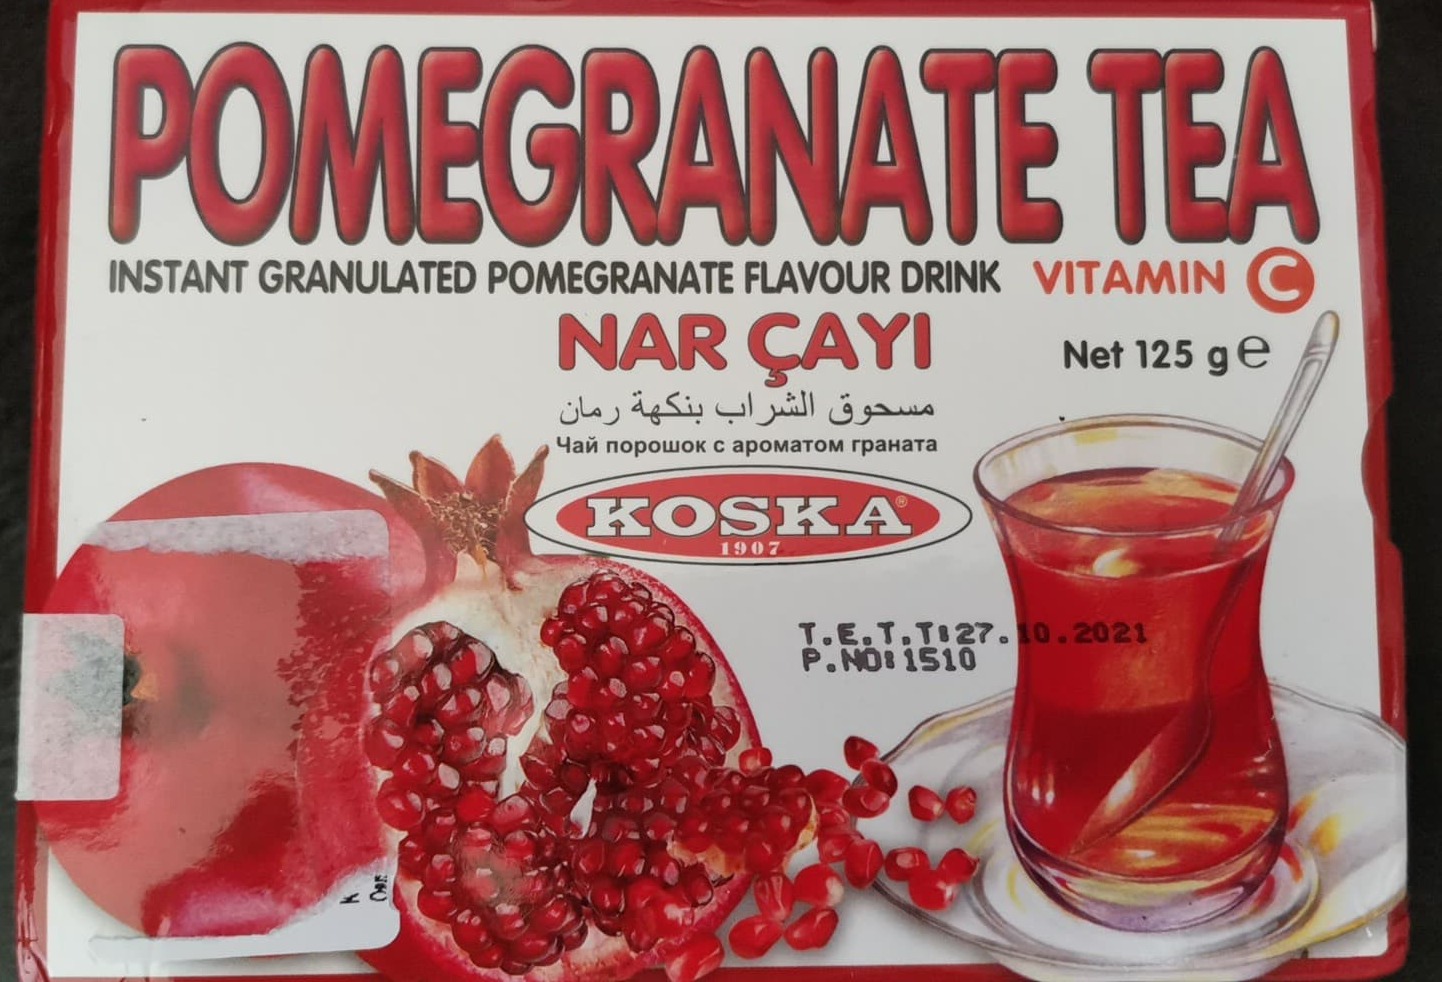 Turkish Traditional Pomegranate Tea Instant Granulated from Koska ชาทับทิม มีวิตามินซี ขนาด 125 กรัม